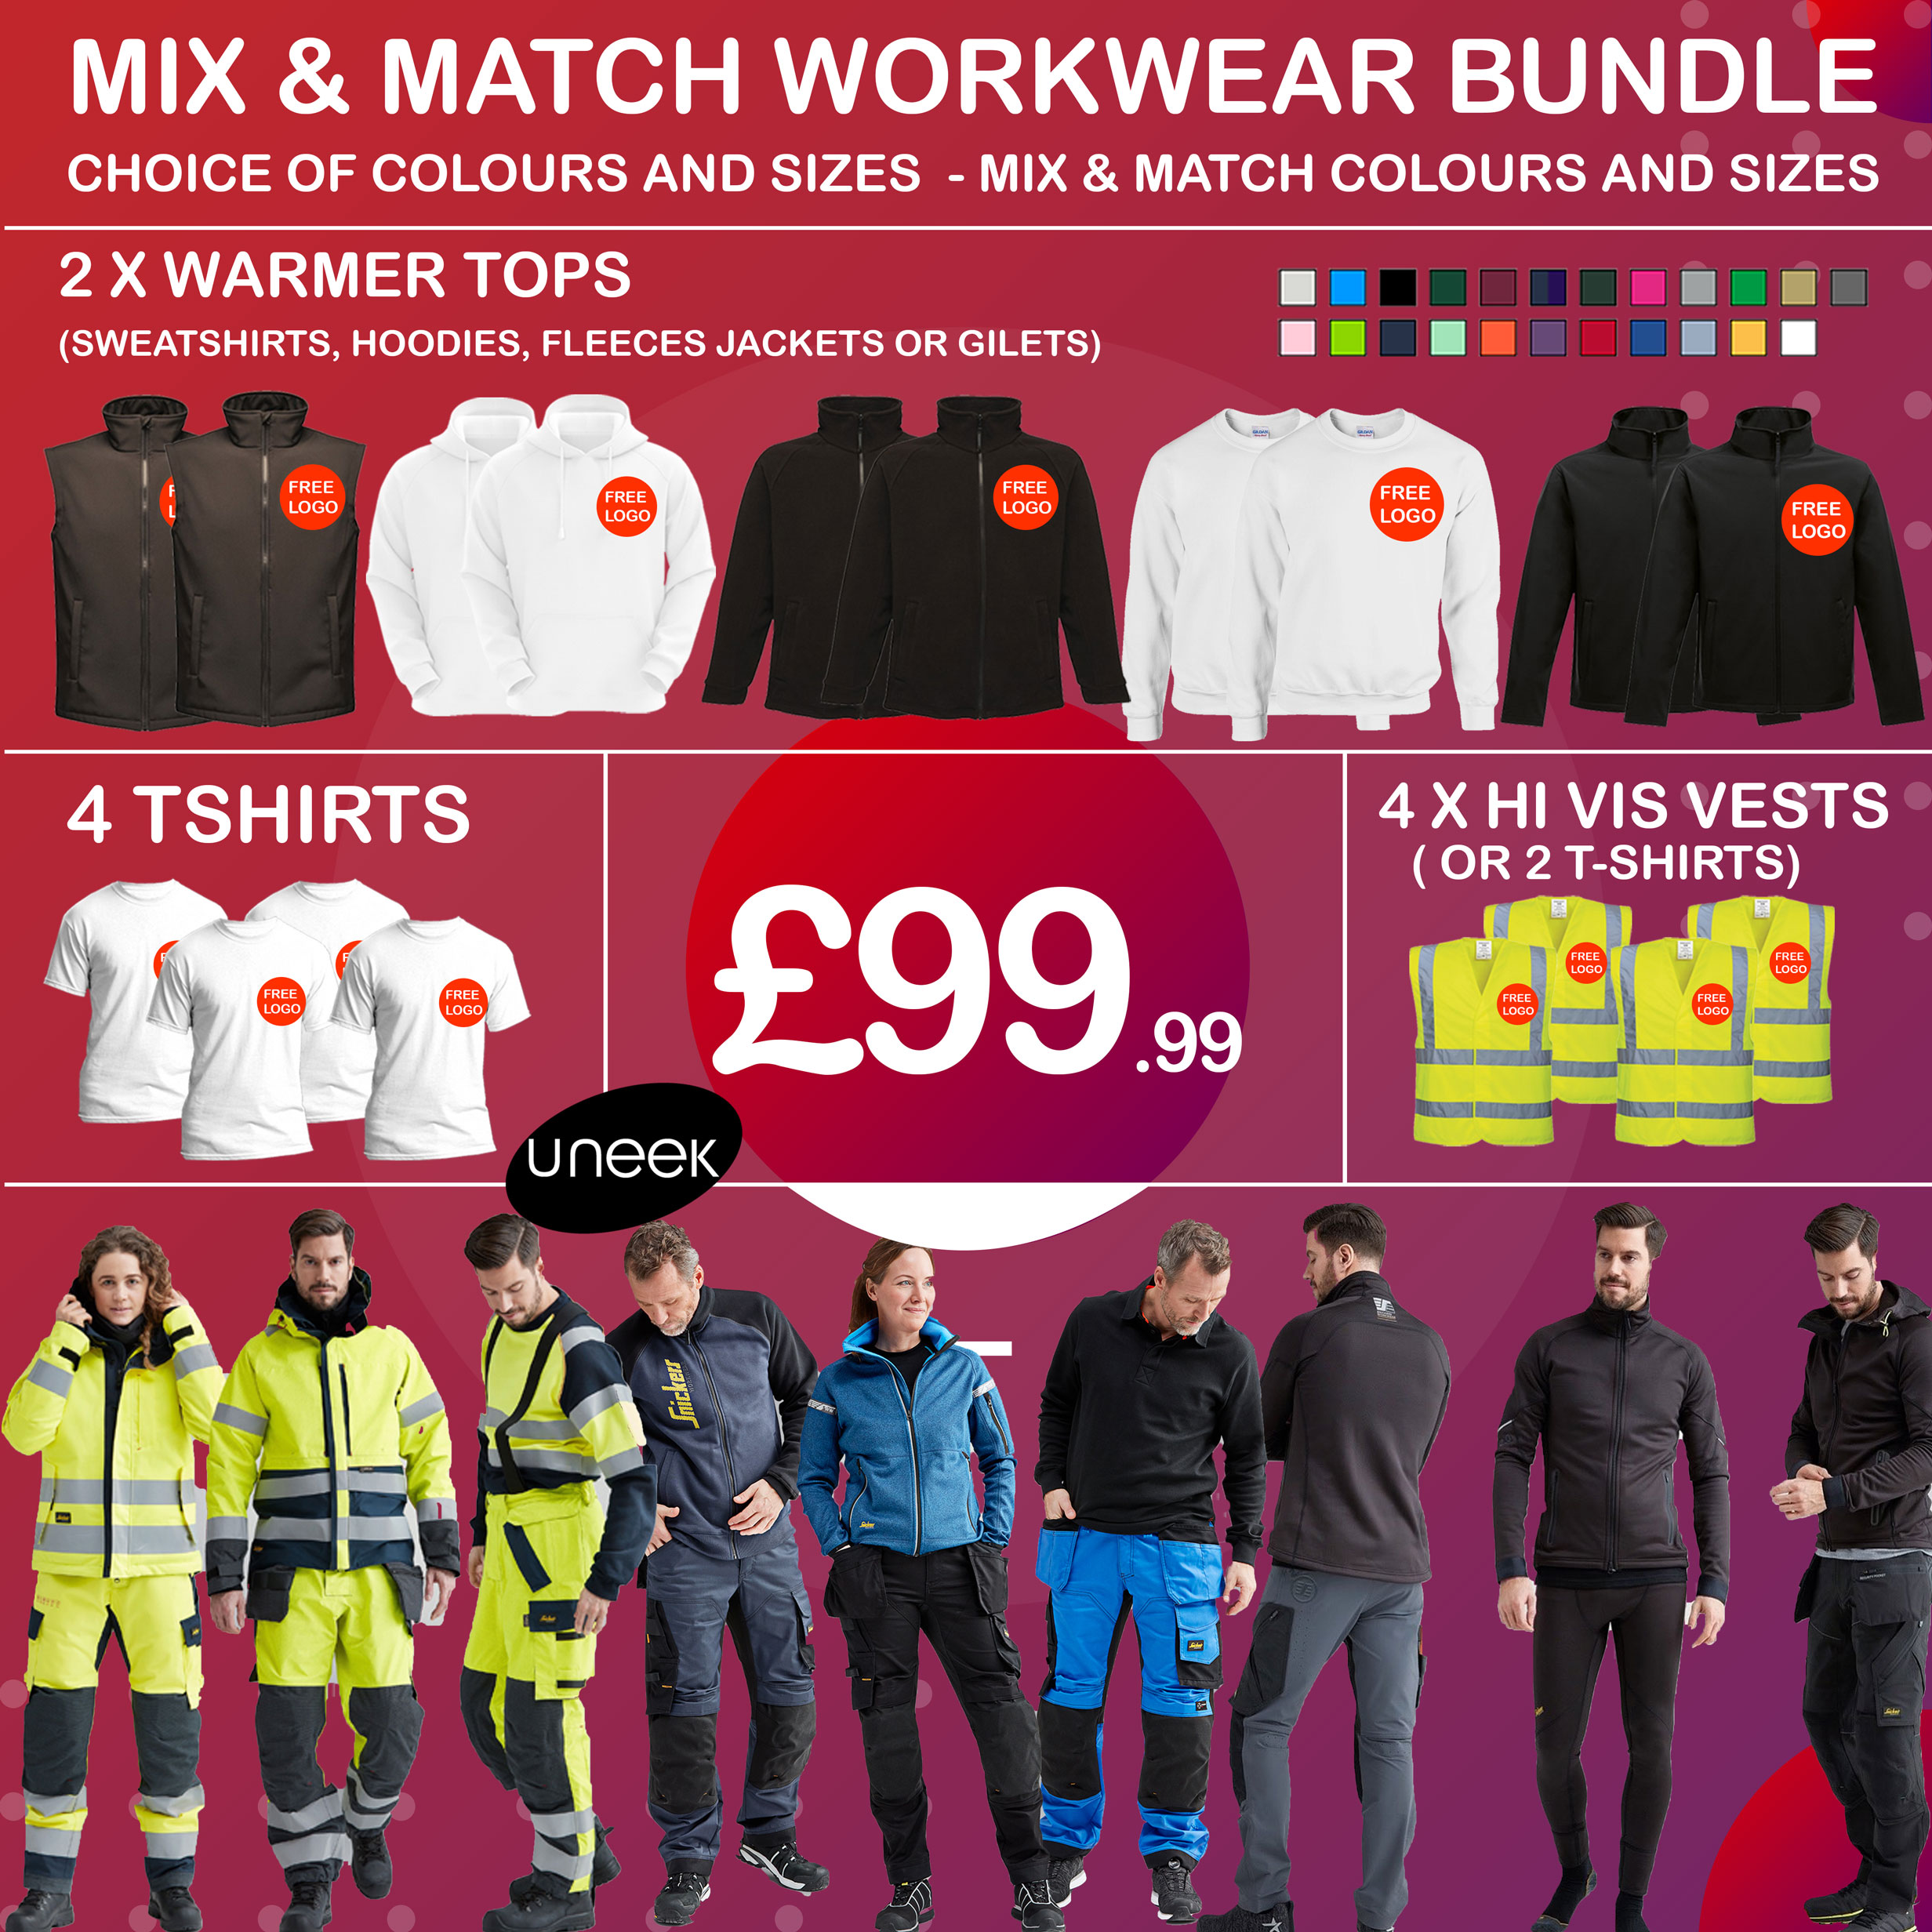 https://www.theworkwear.co.uk/wp-content/uploads/2021/10/Mix-Match-Workwear-Bundle-4.jpg